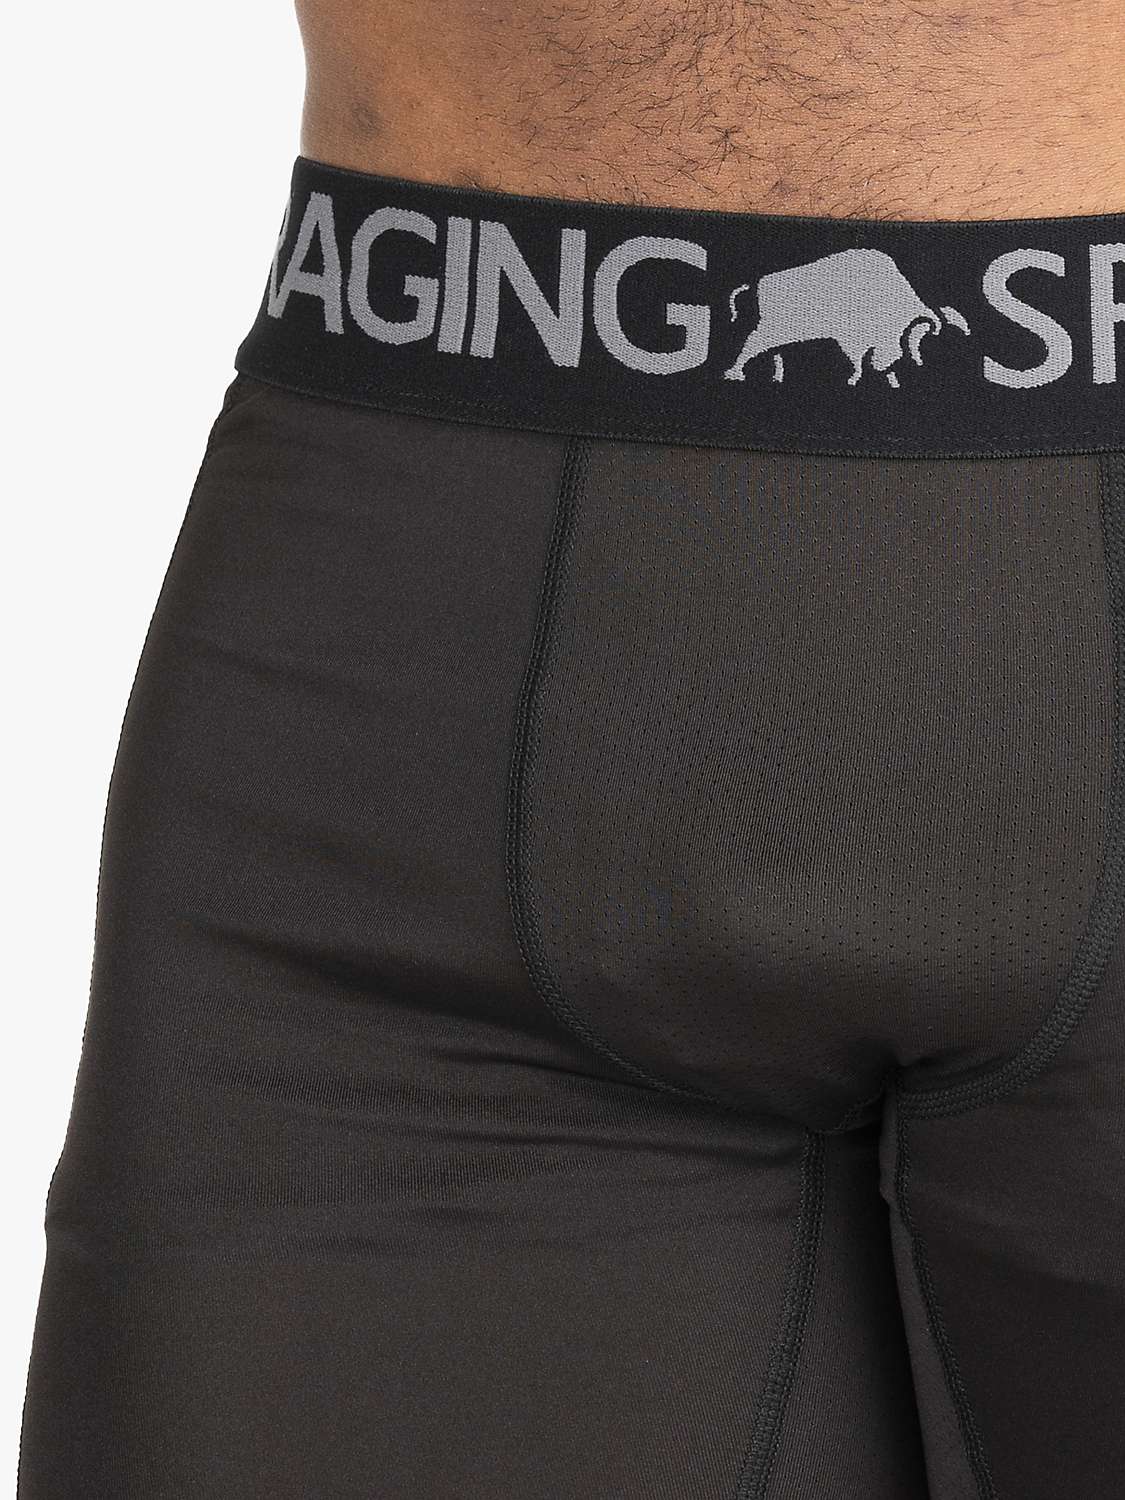 Buy Raging Bull Base Compression Shorts Online at johnlewis.com